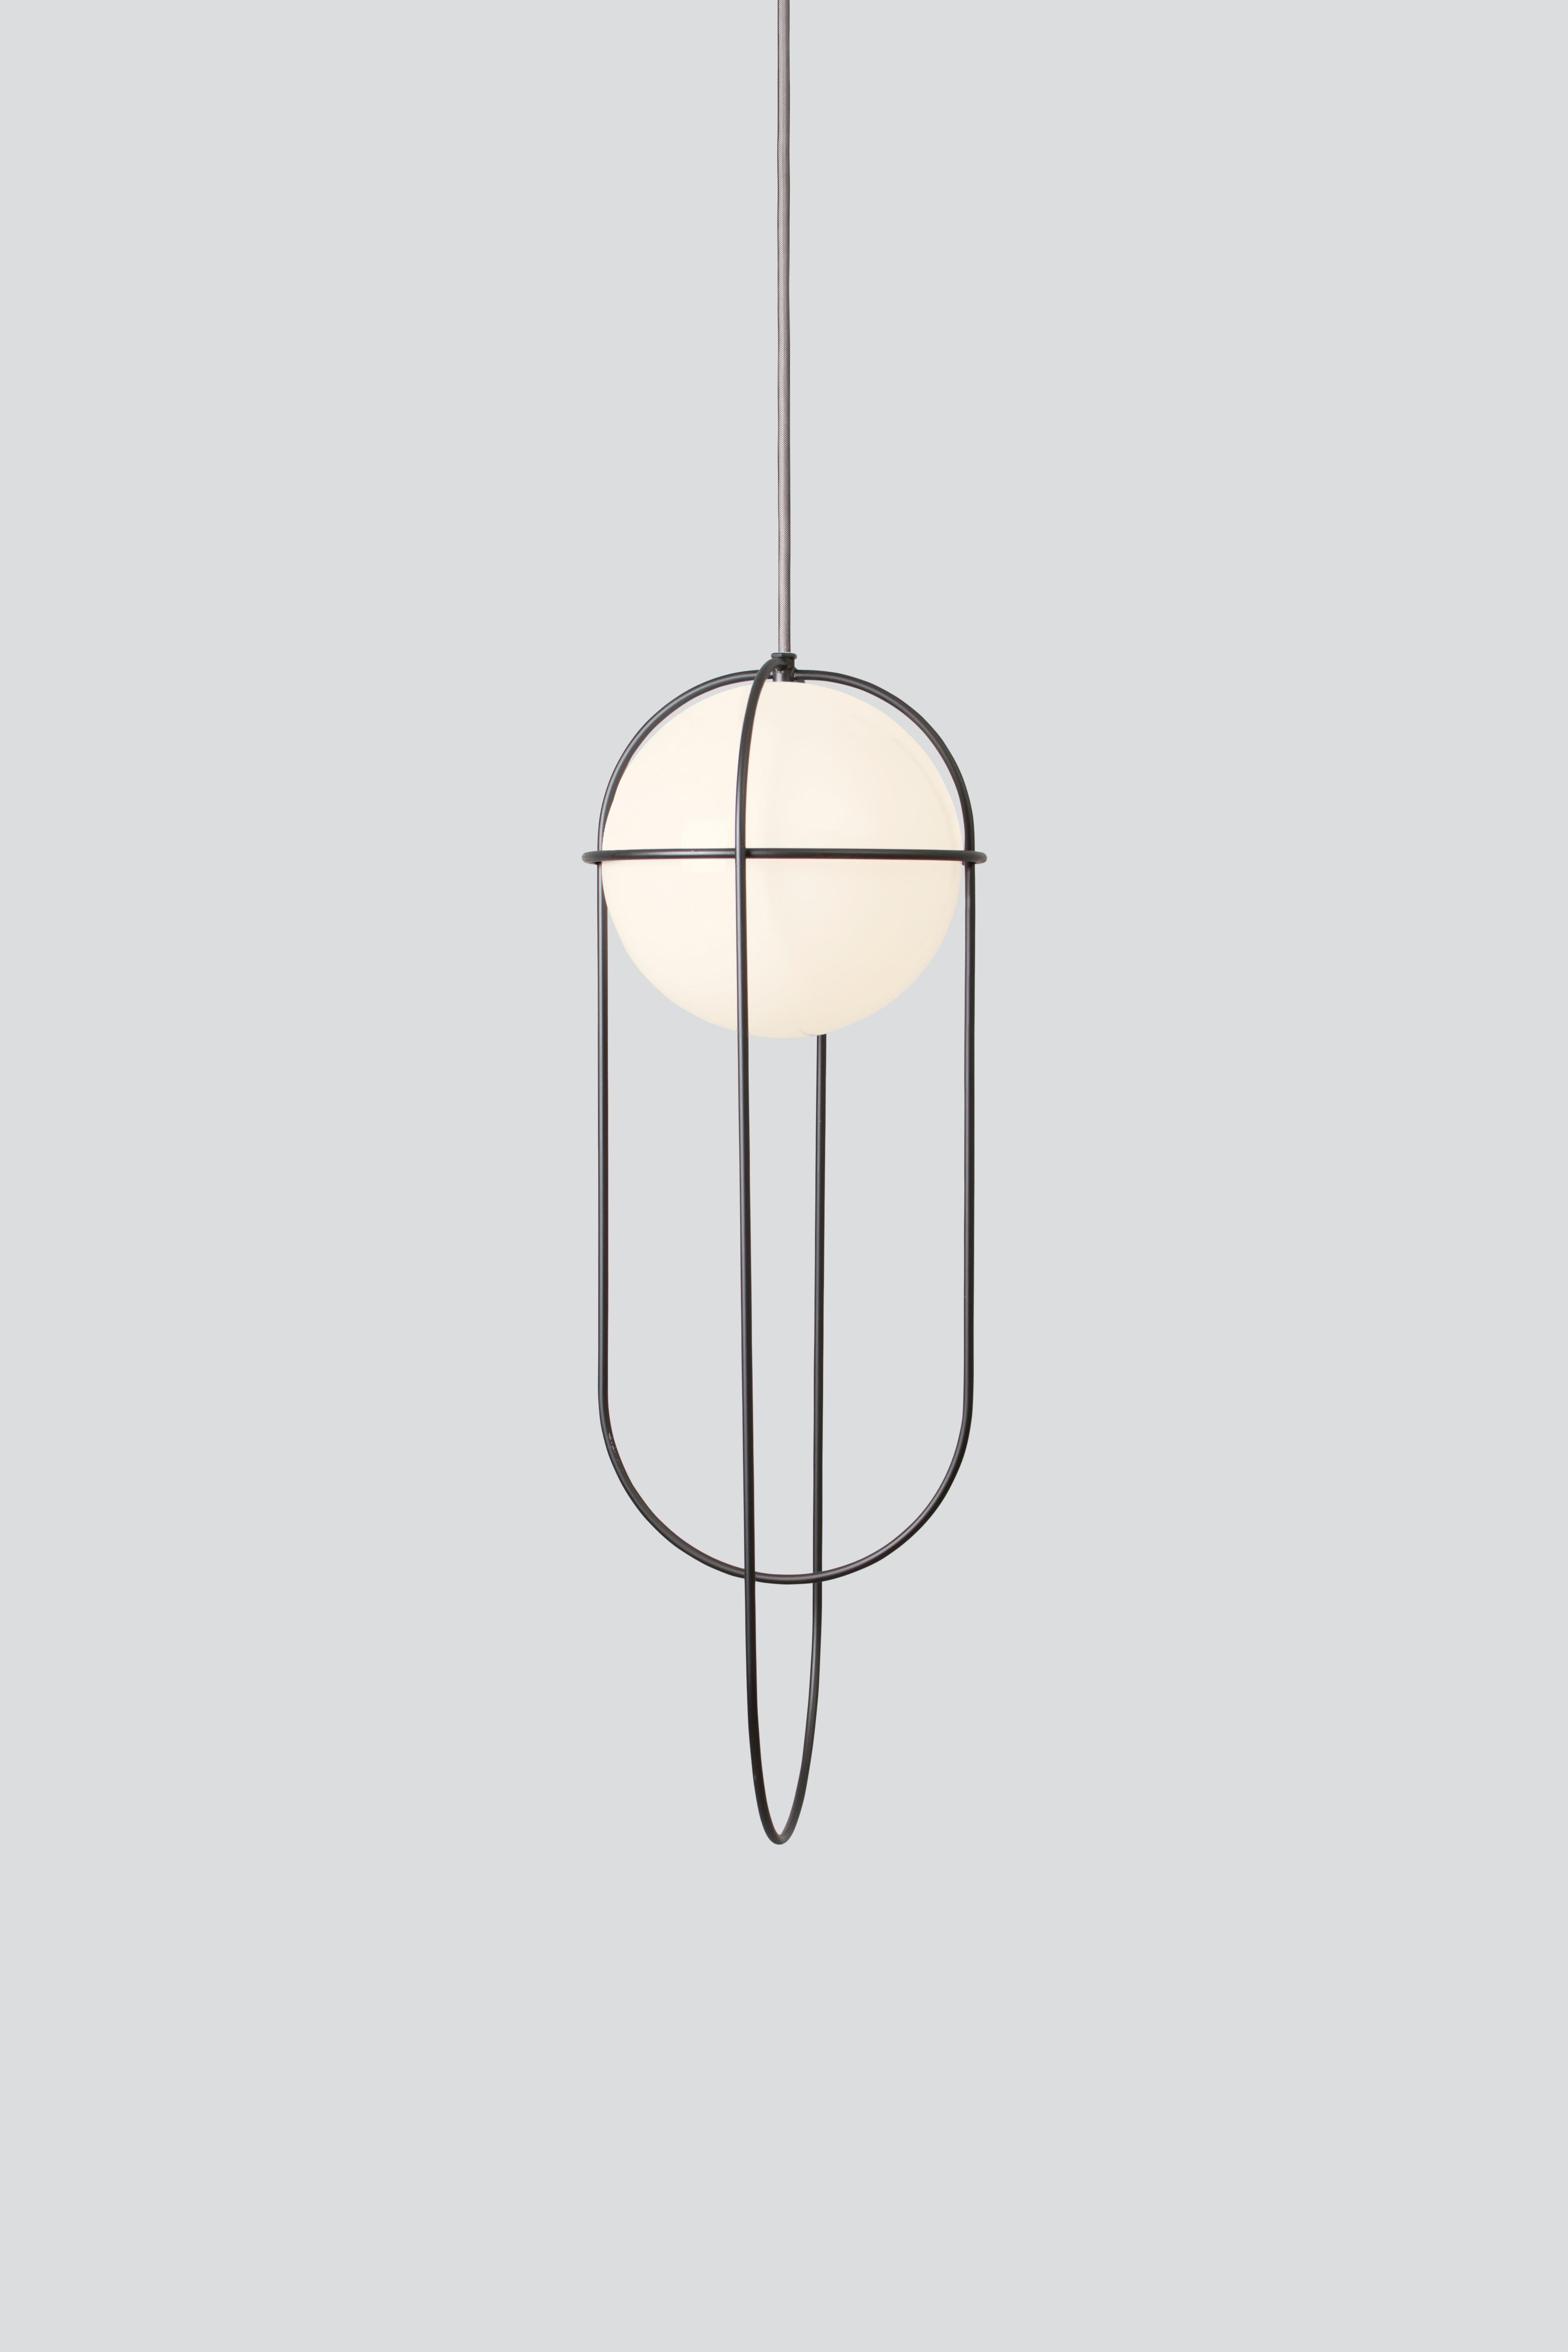 Canadian Contemporary Pendant Lamp 'Orbit', White For Sale